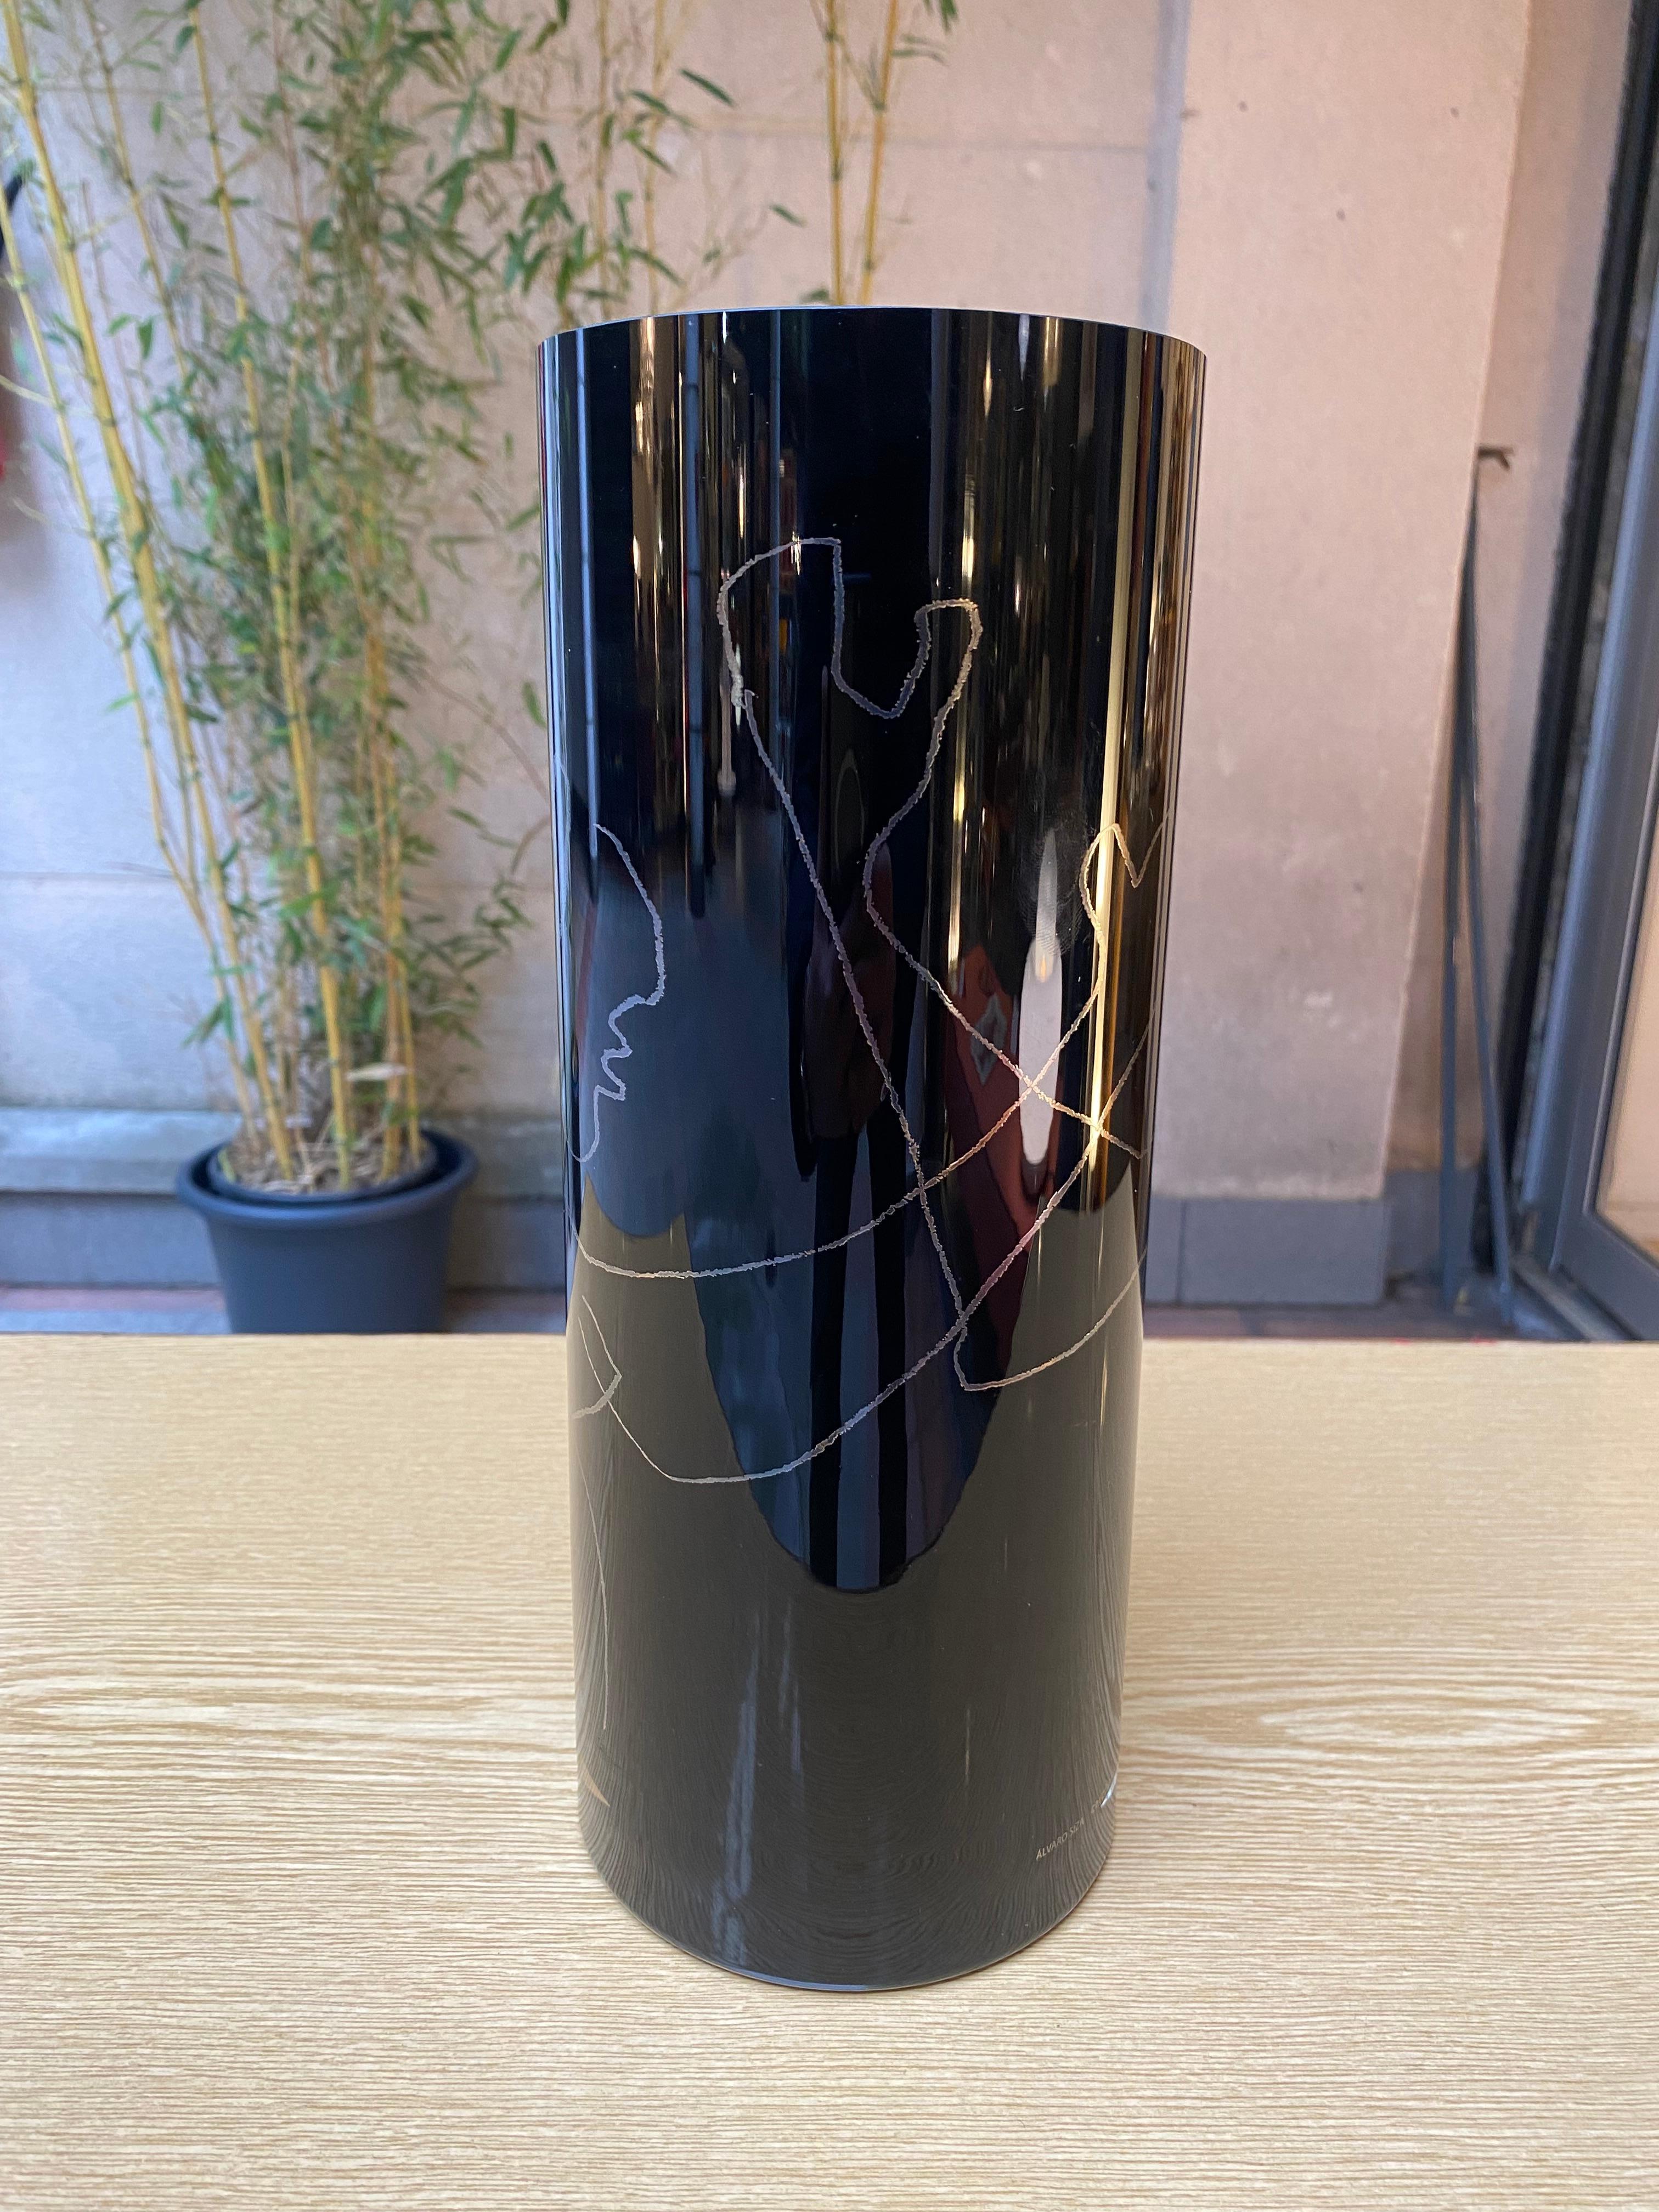 Alvaro Siza
Black glass vase
Edicoes dinner
Around 1980
H 30 x diameter 12
Sign
Rare
In very good condition